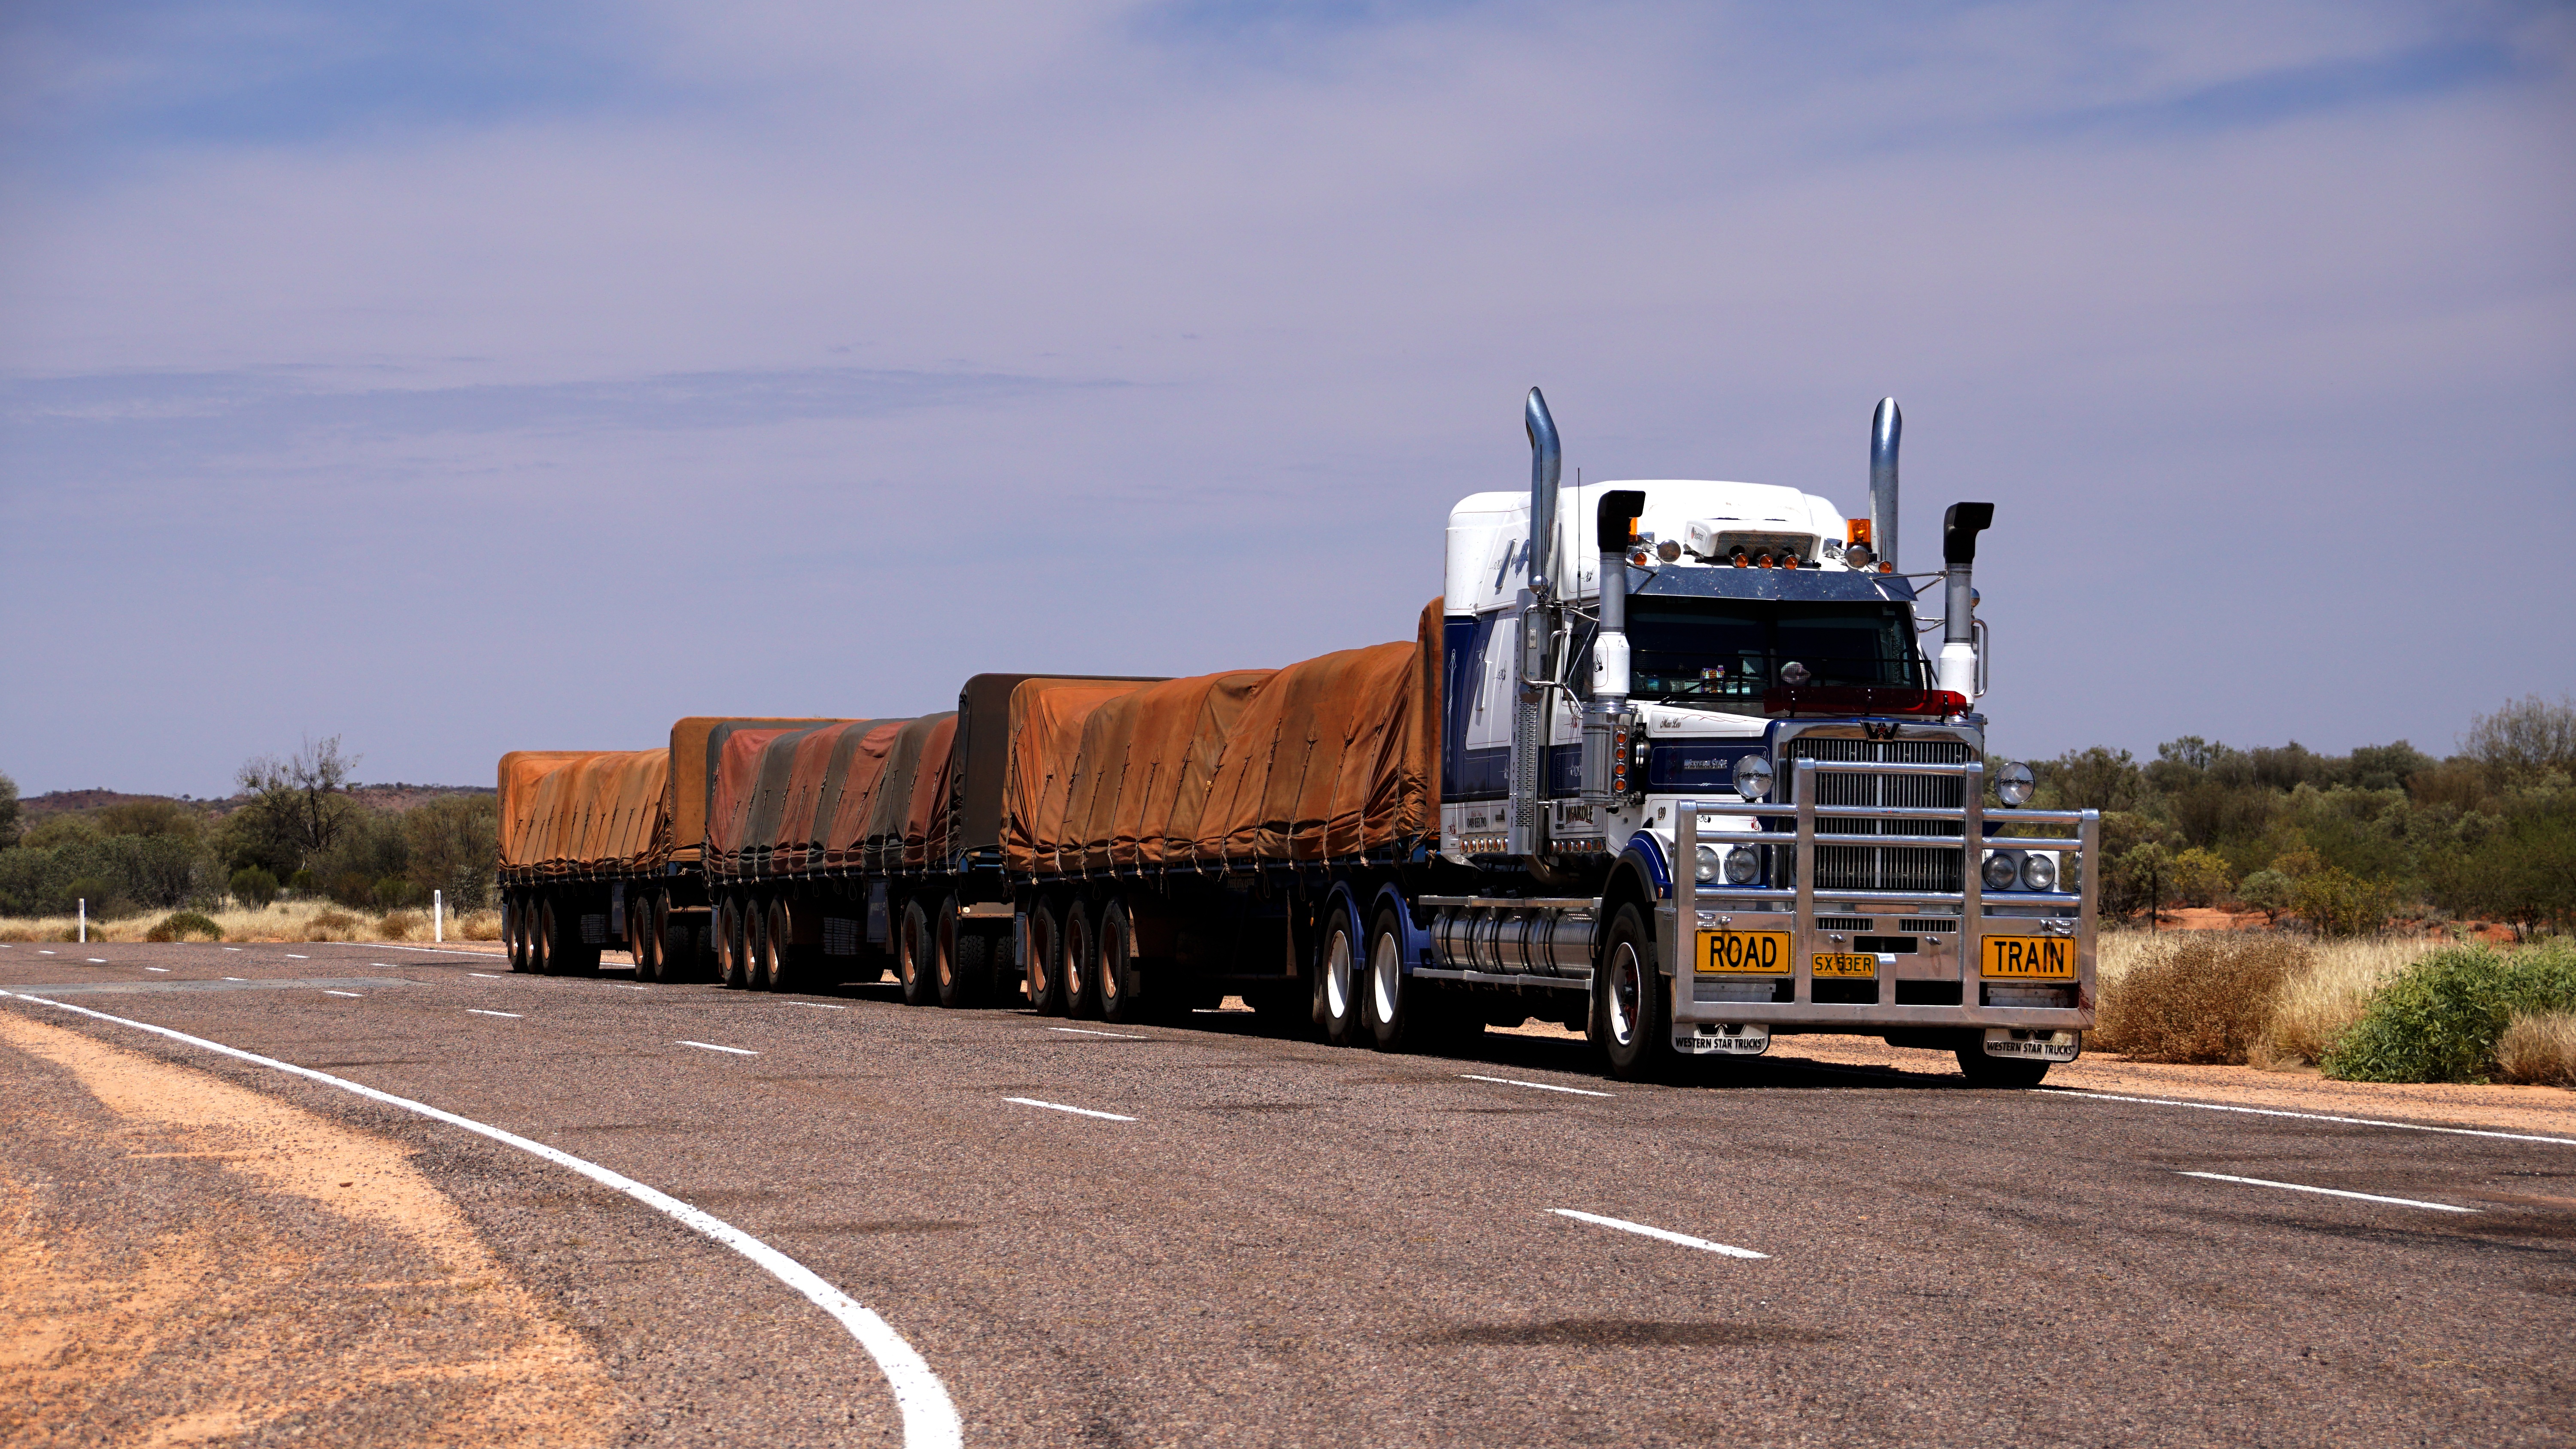 Western Star Road Train Vehicle Truck Australia Road Outback 6000x3376